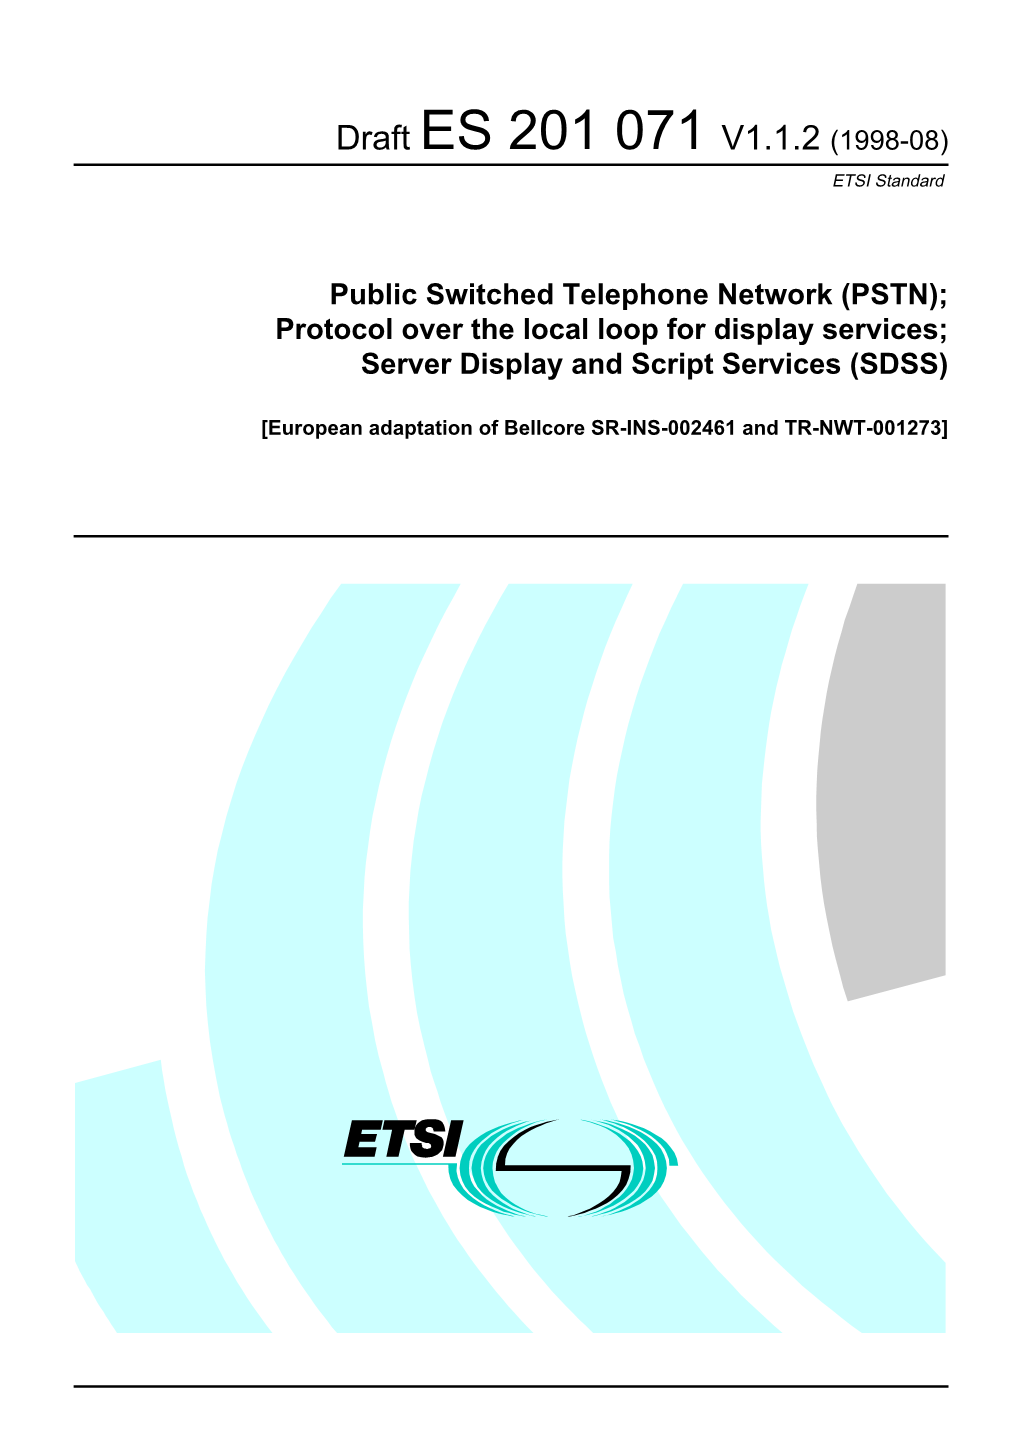 ES 201 071 V1.1.2 (1998-08) ETSI Standard